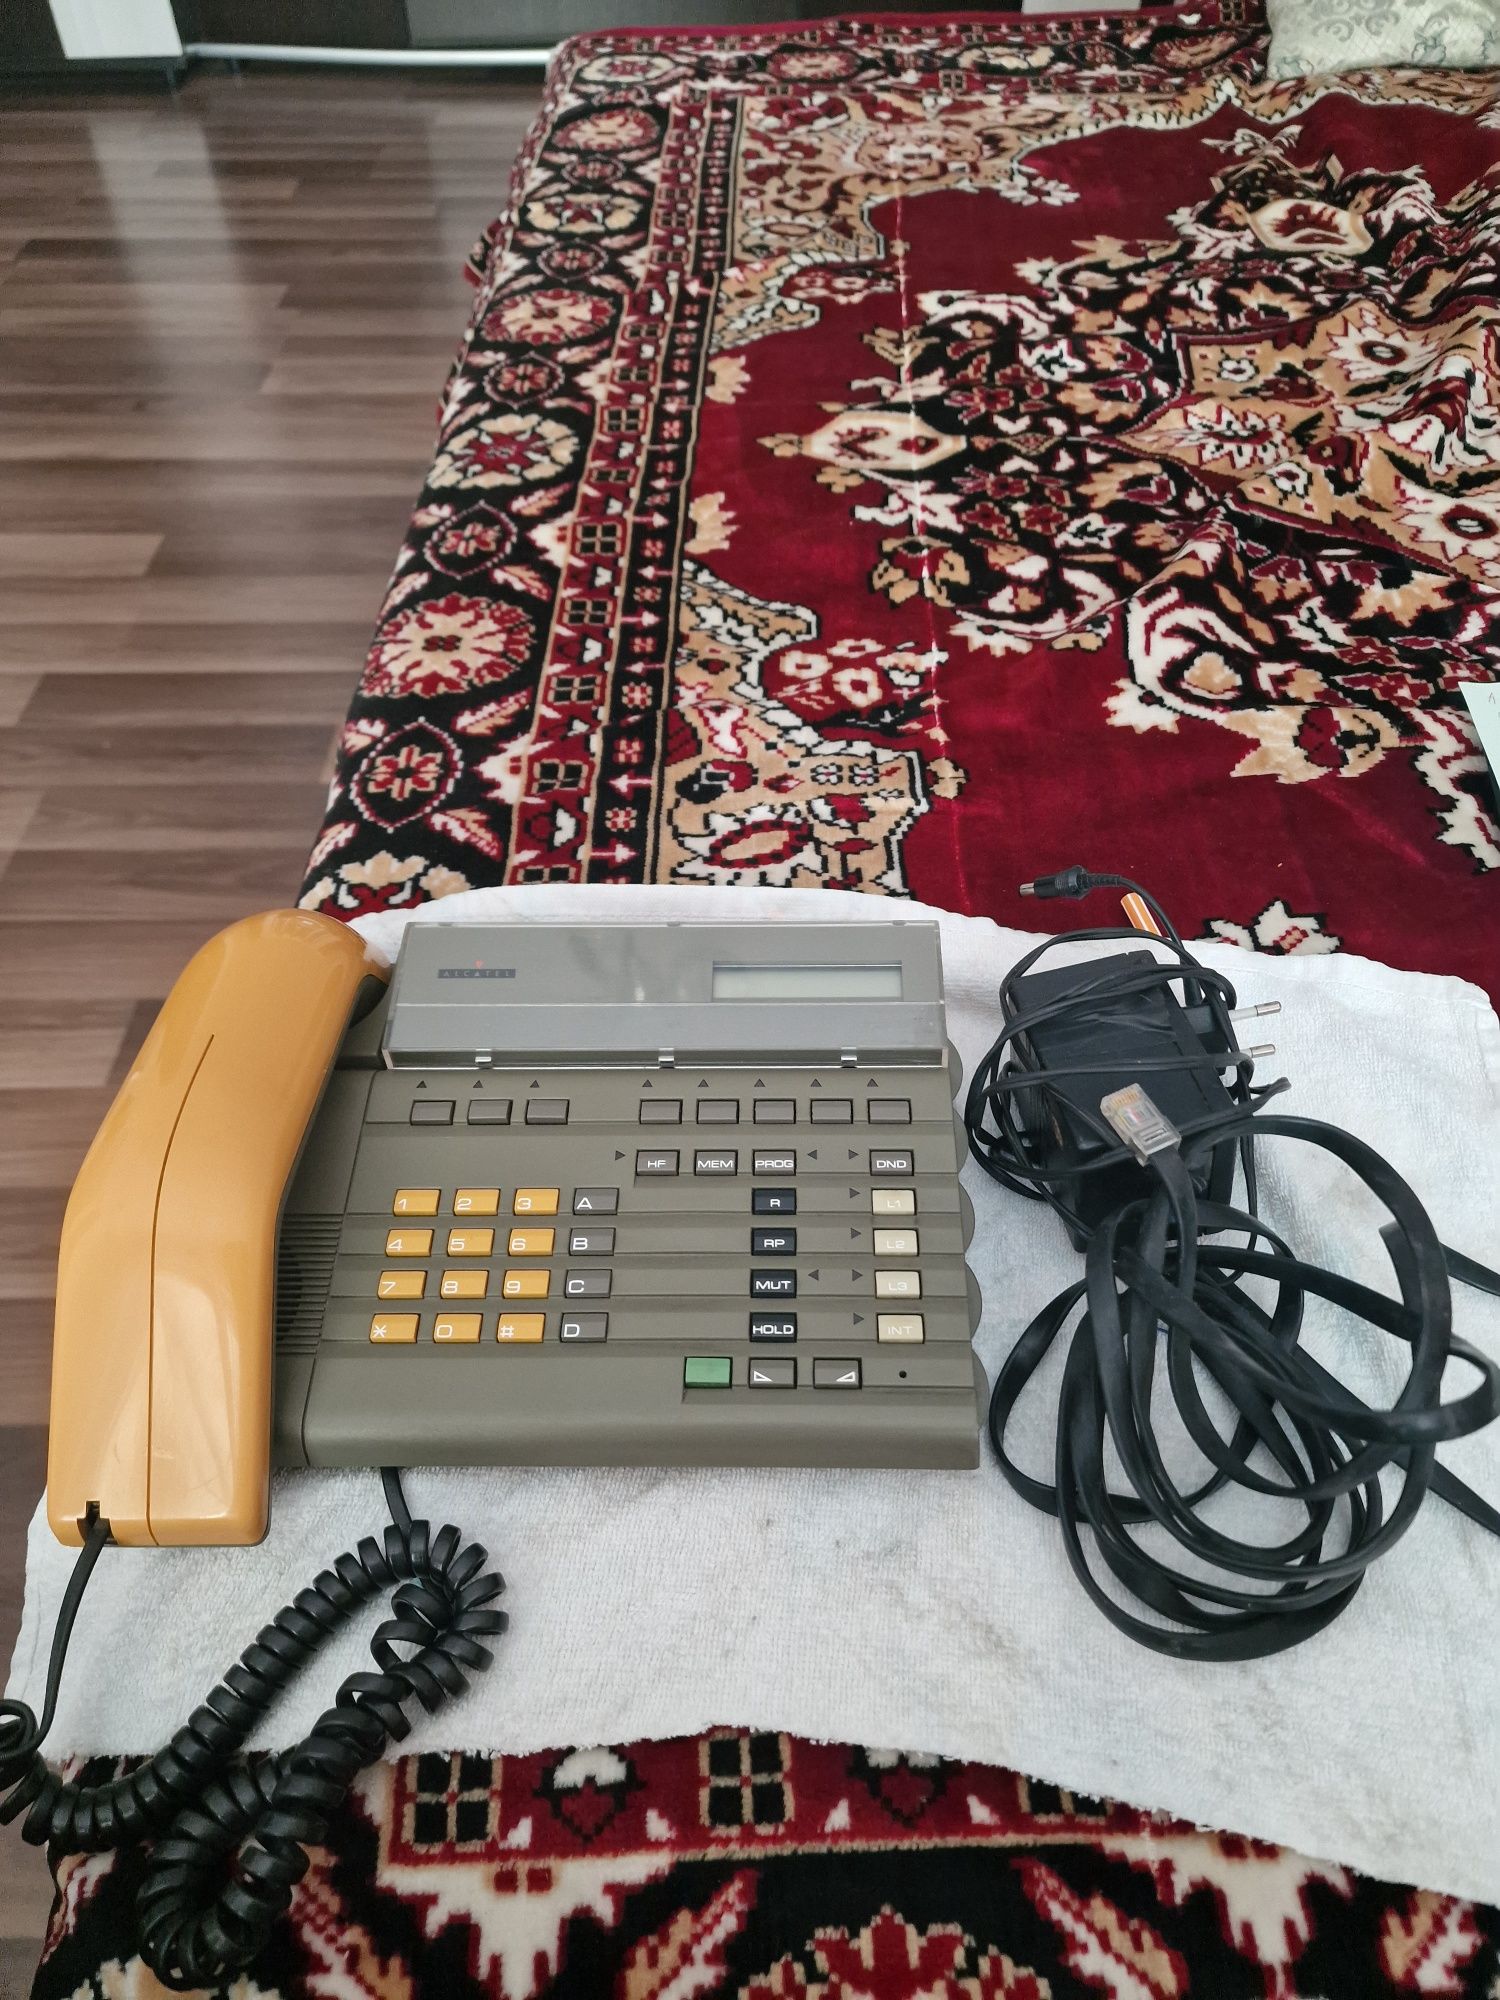 Microcentrala telefonica quark birou 5101